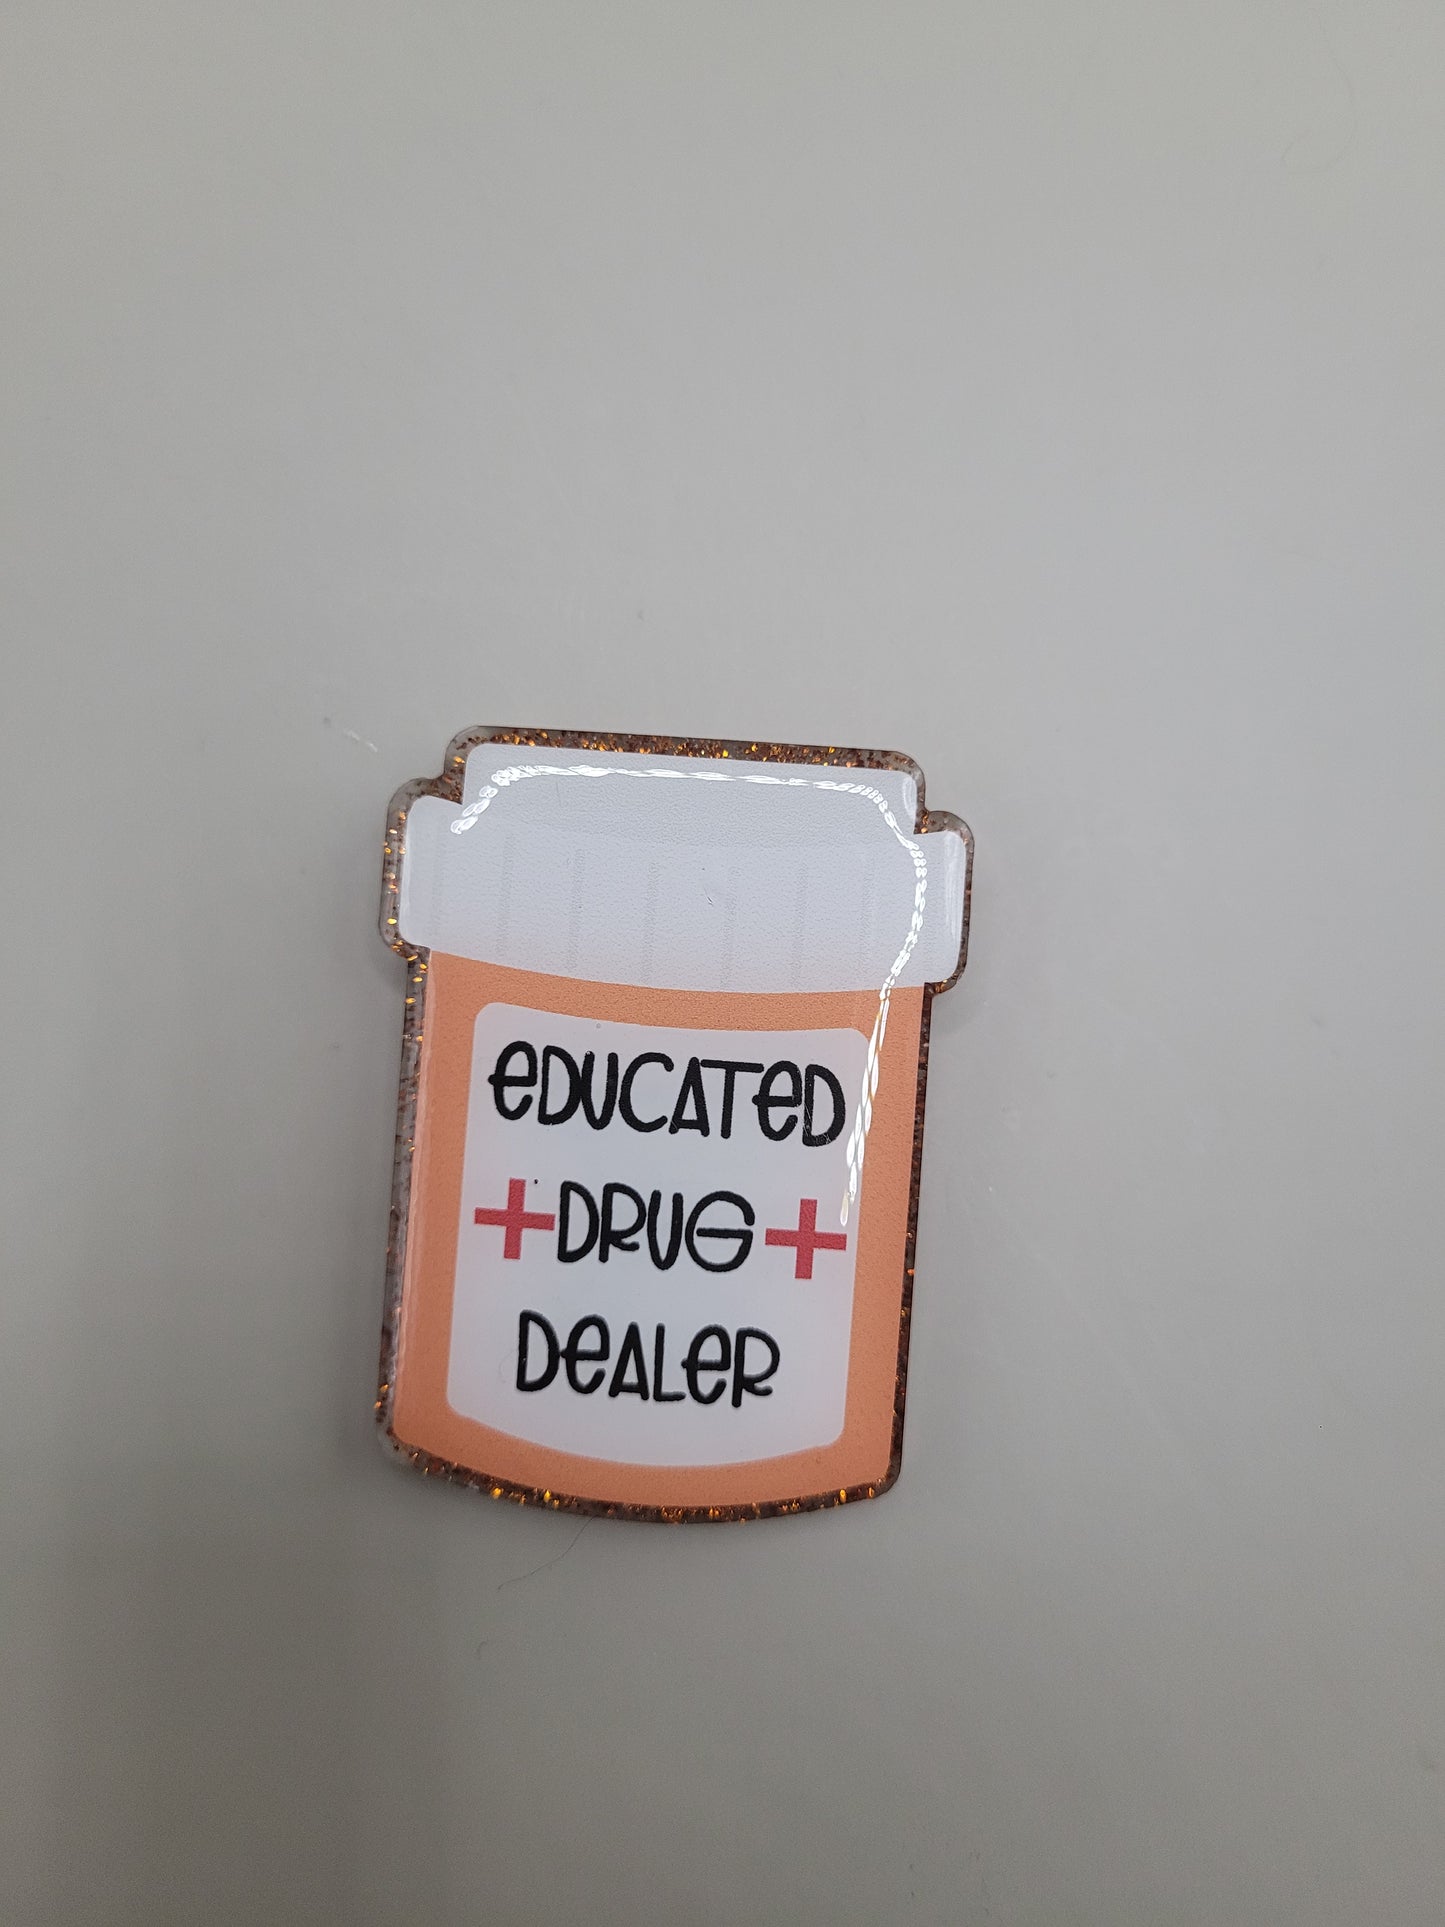 Educated Dealer Badge Face